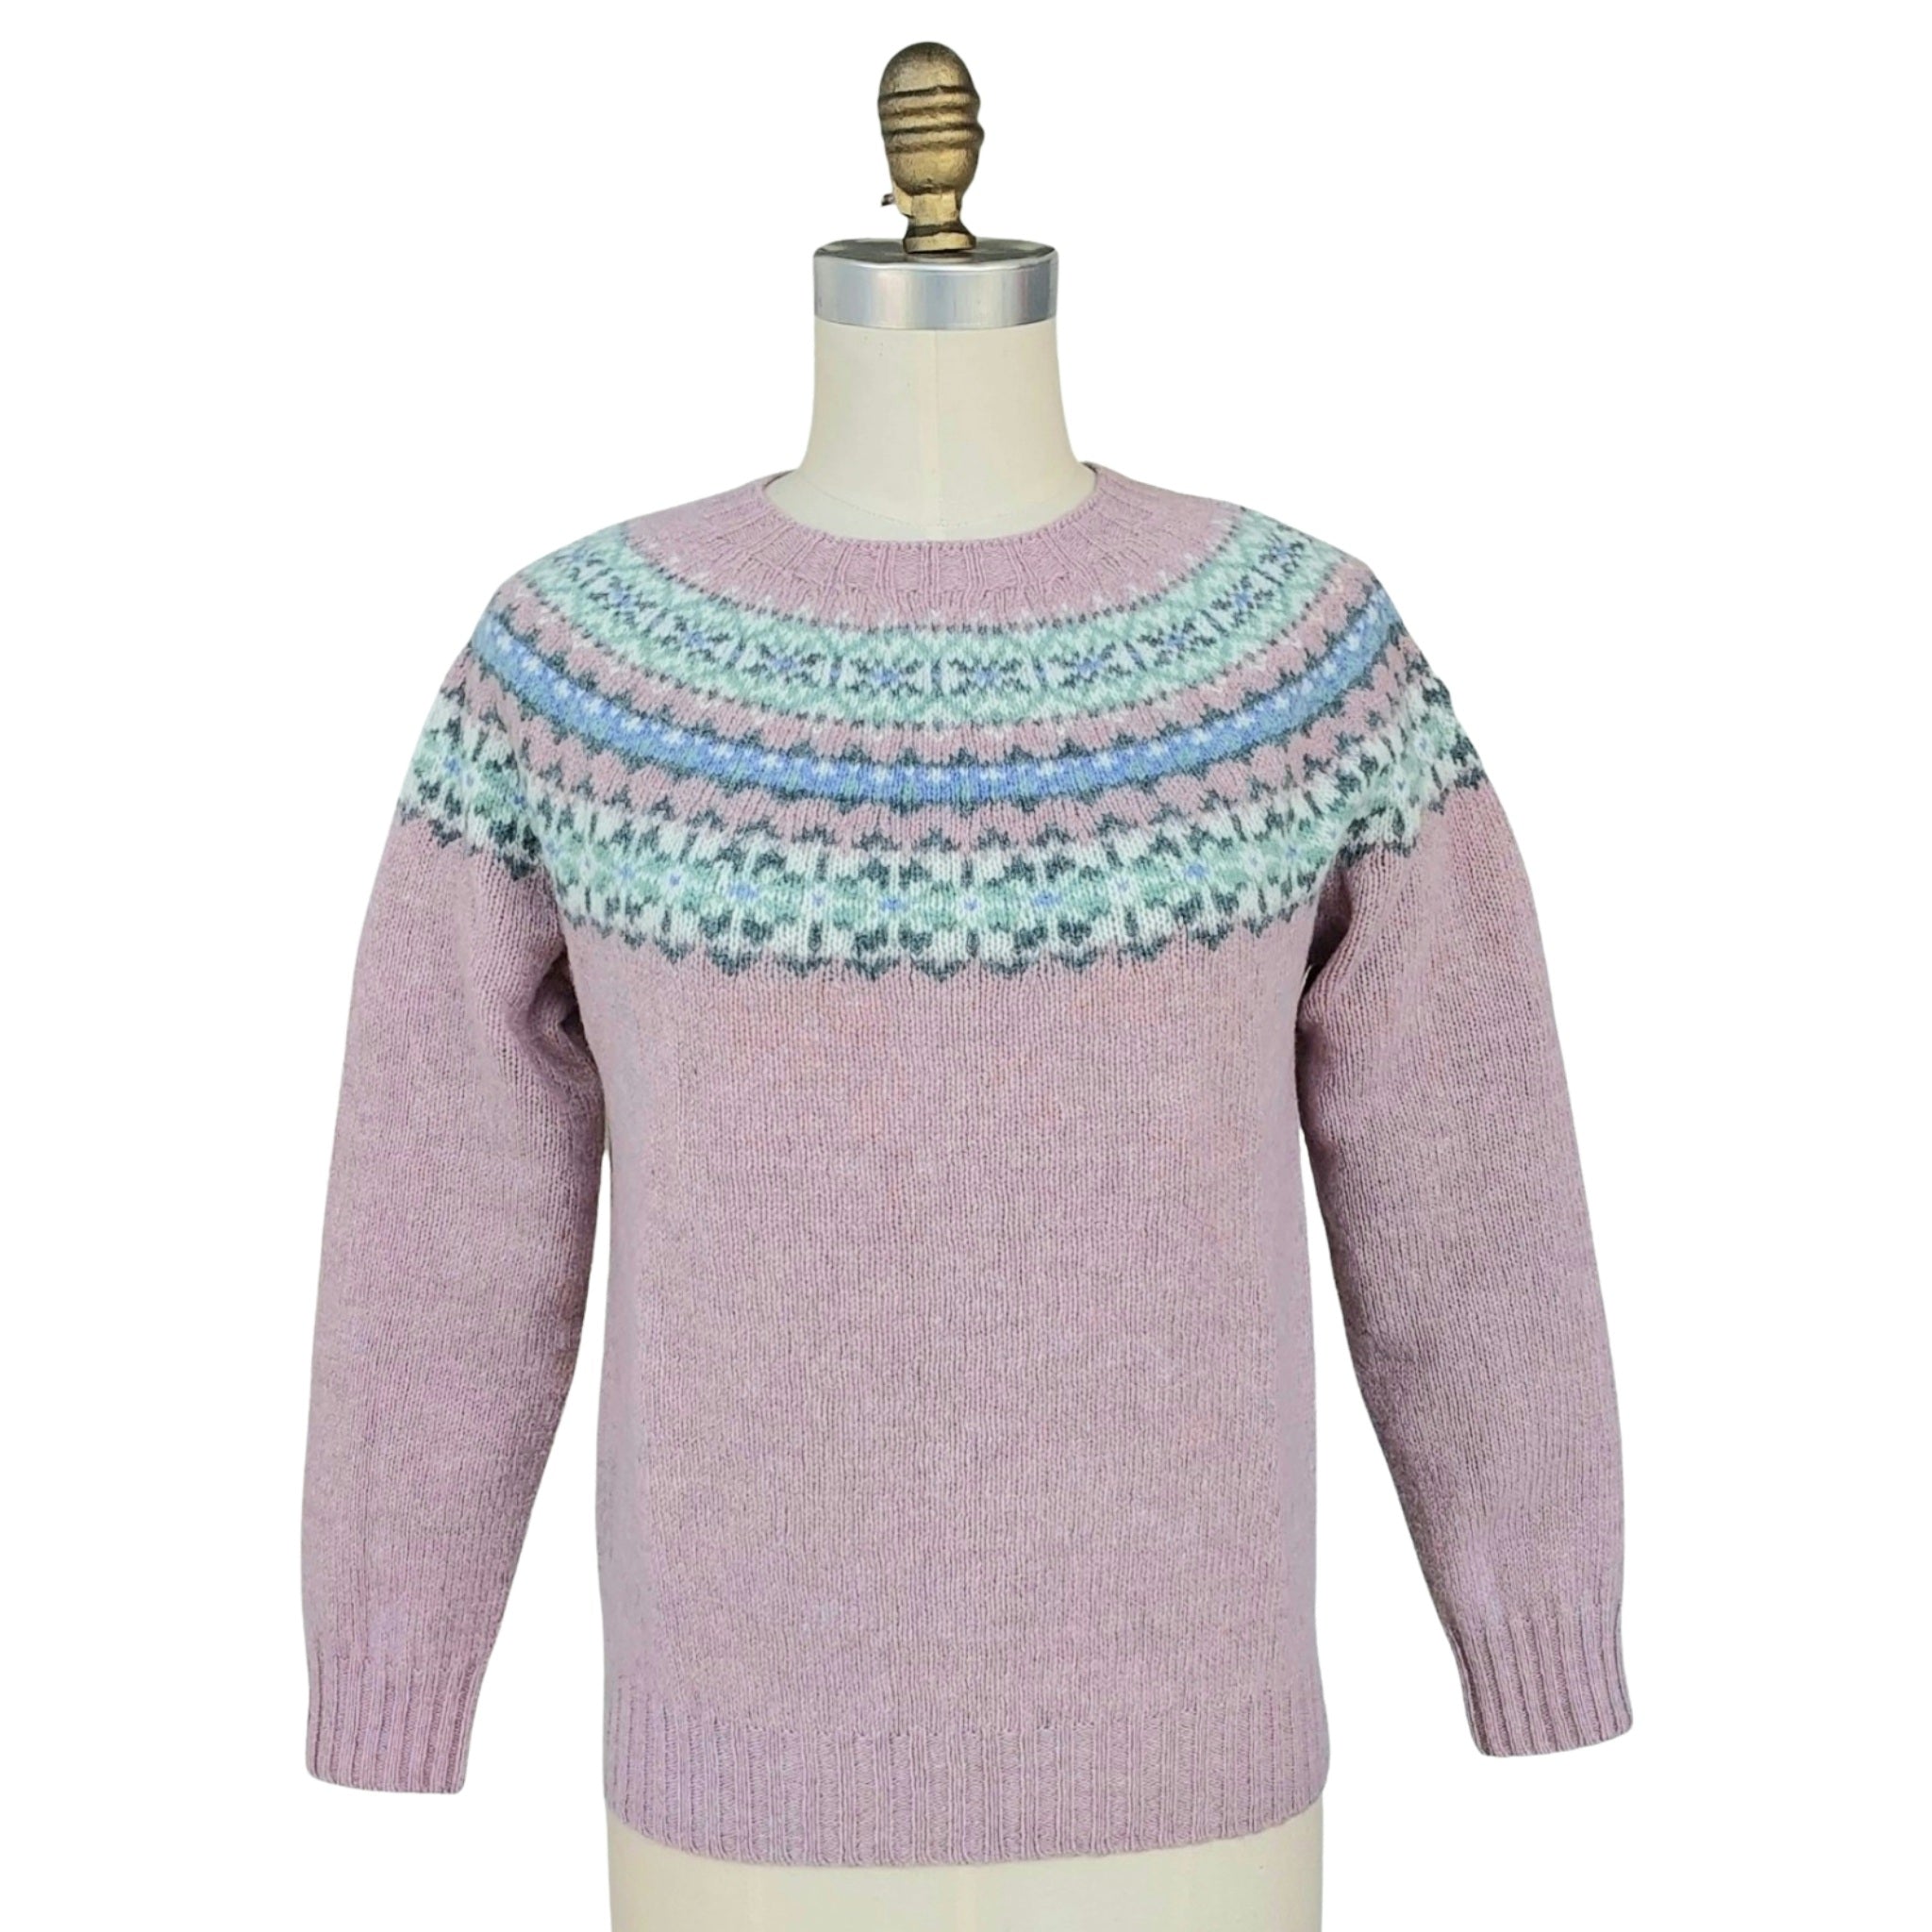 Harley of Scotland Shetland Wool Knit Fairisle Yoke Sweater